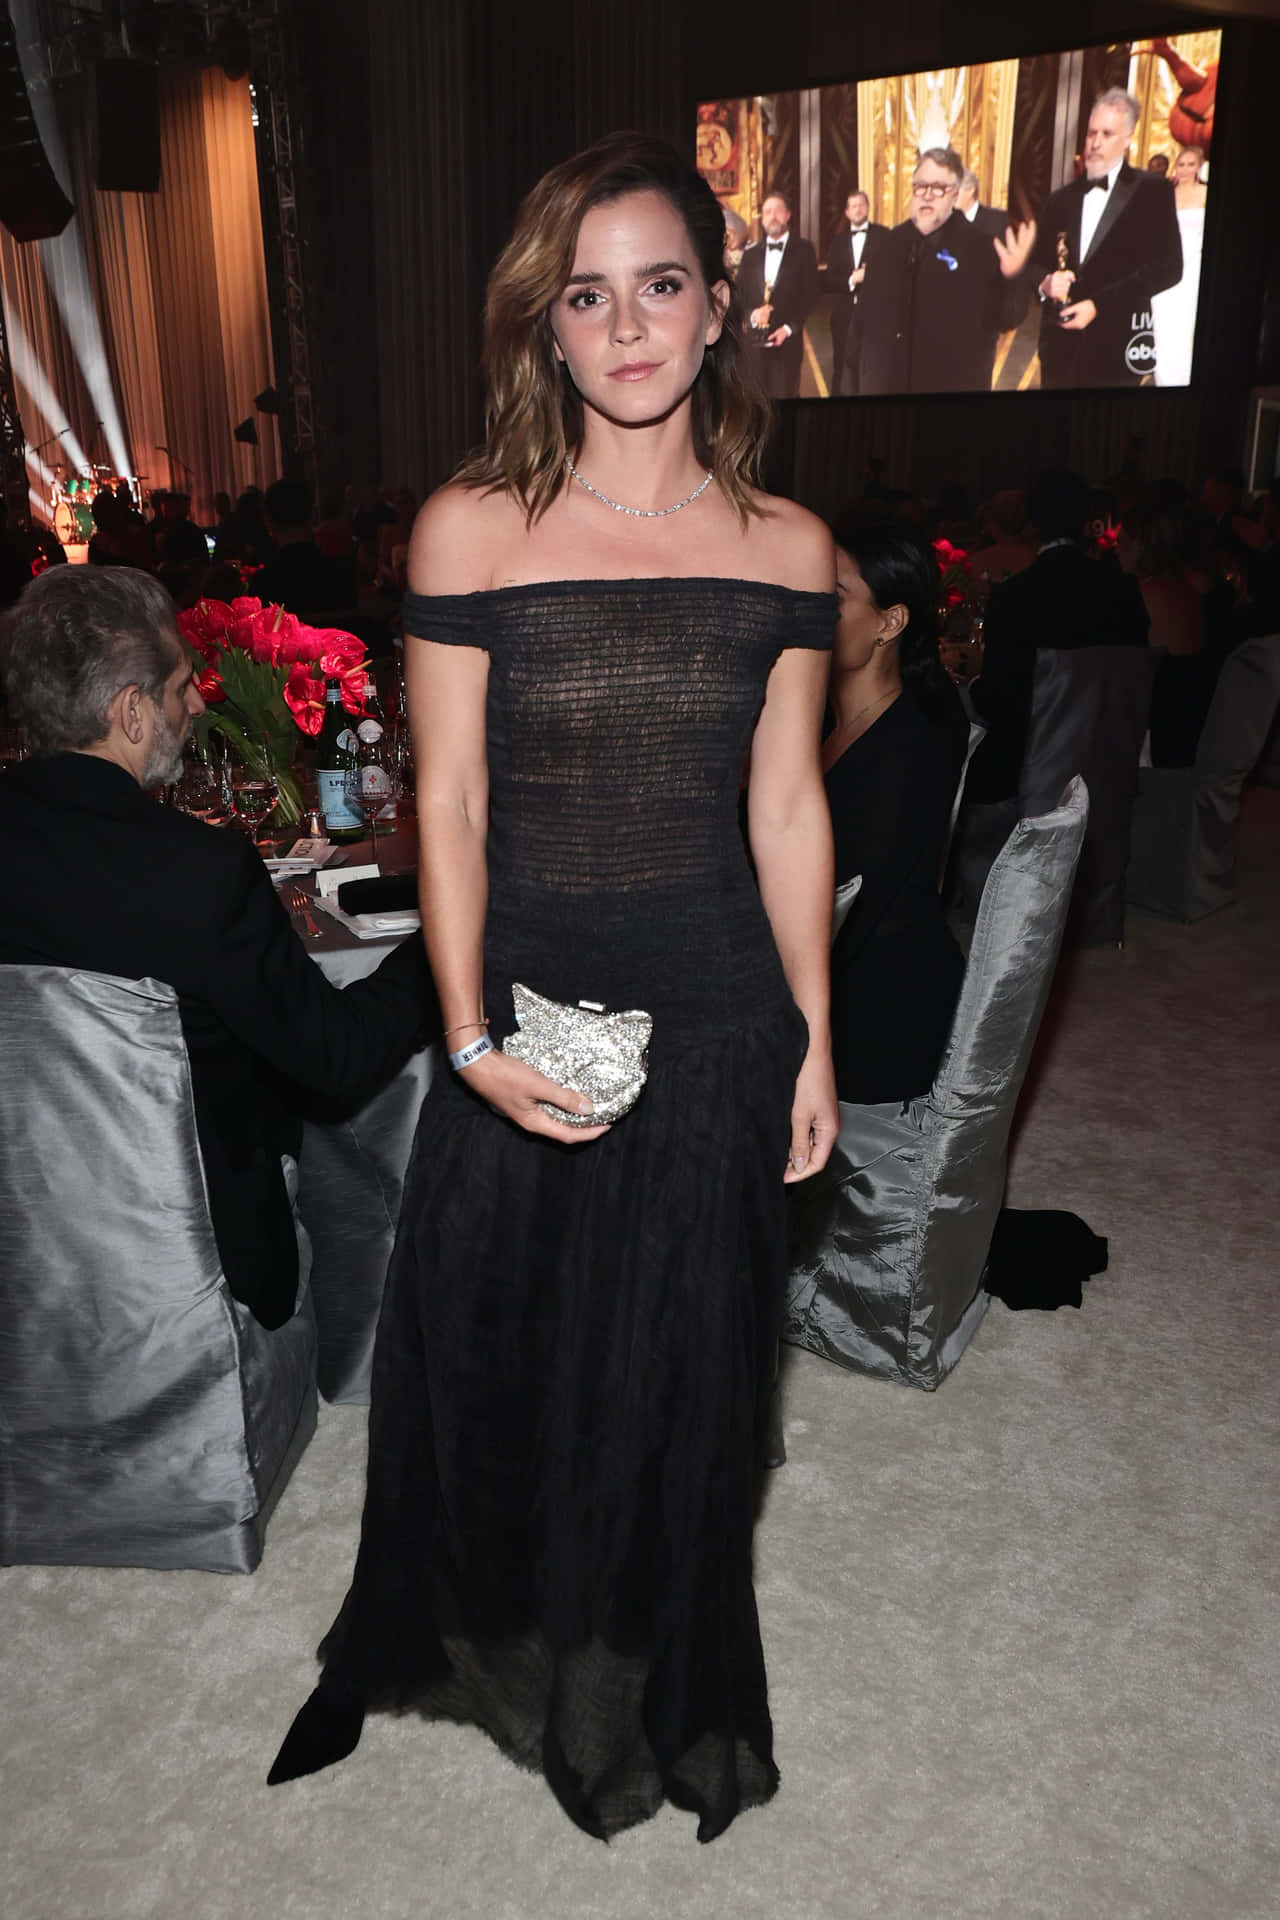 Emma Watson in an elegant pose